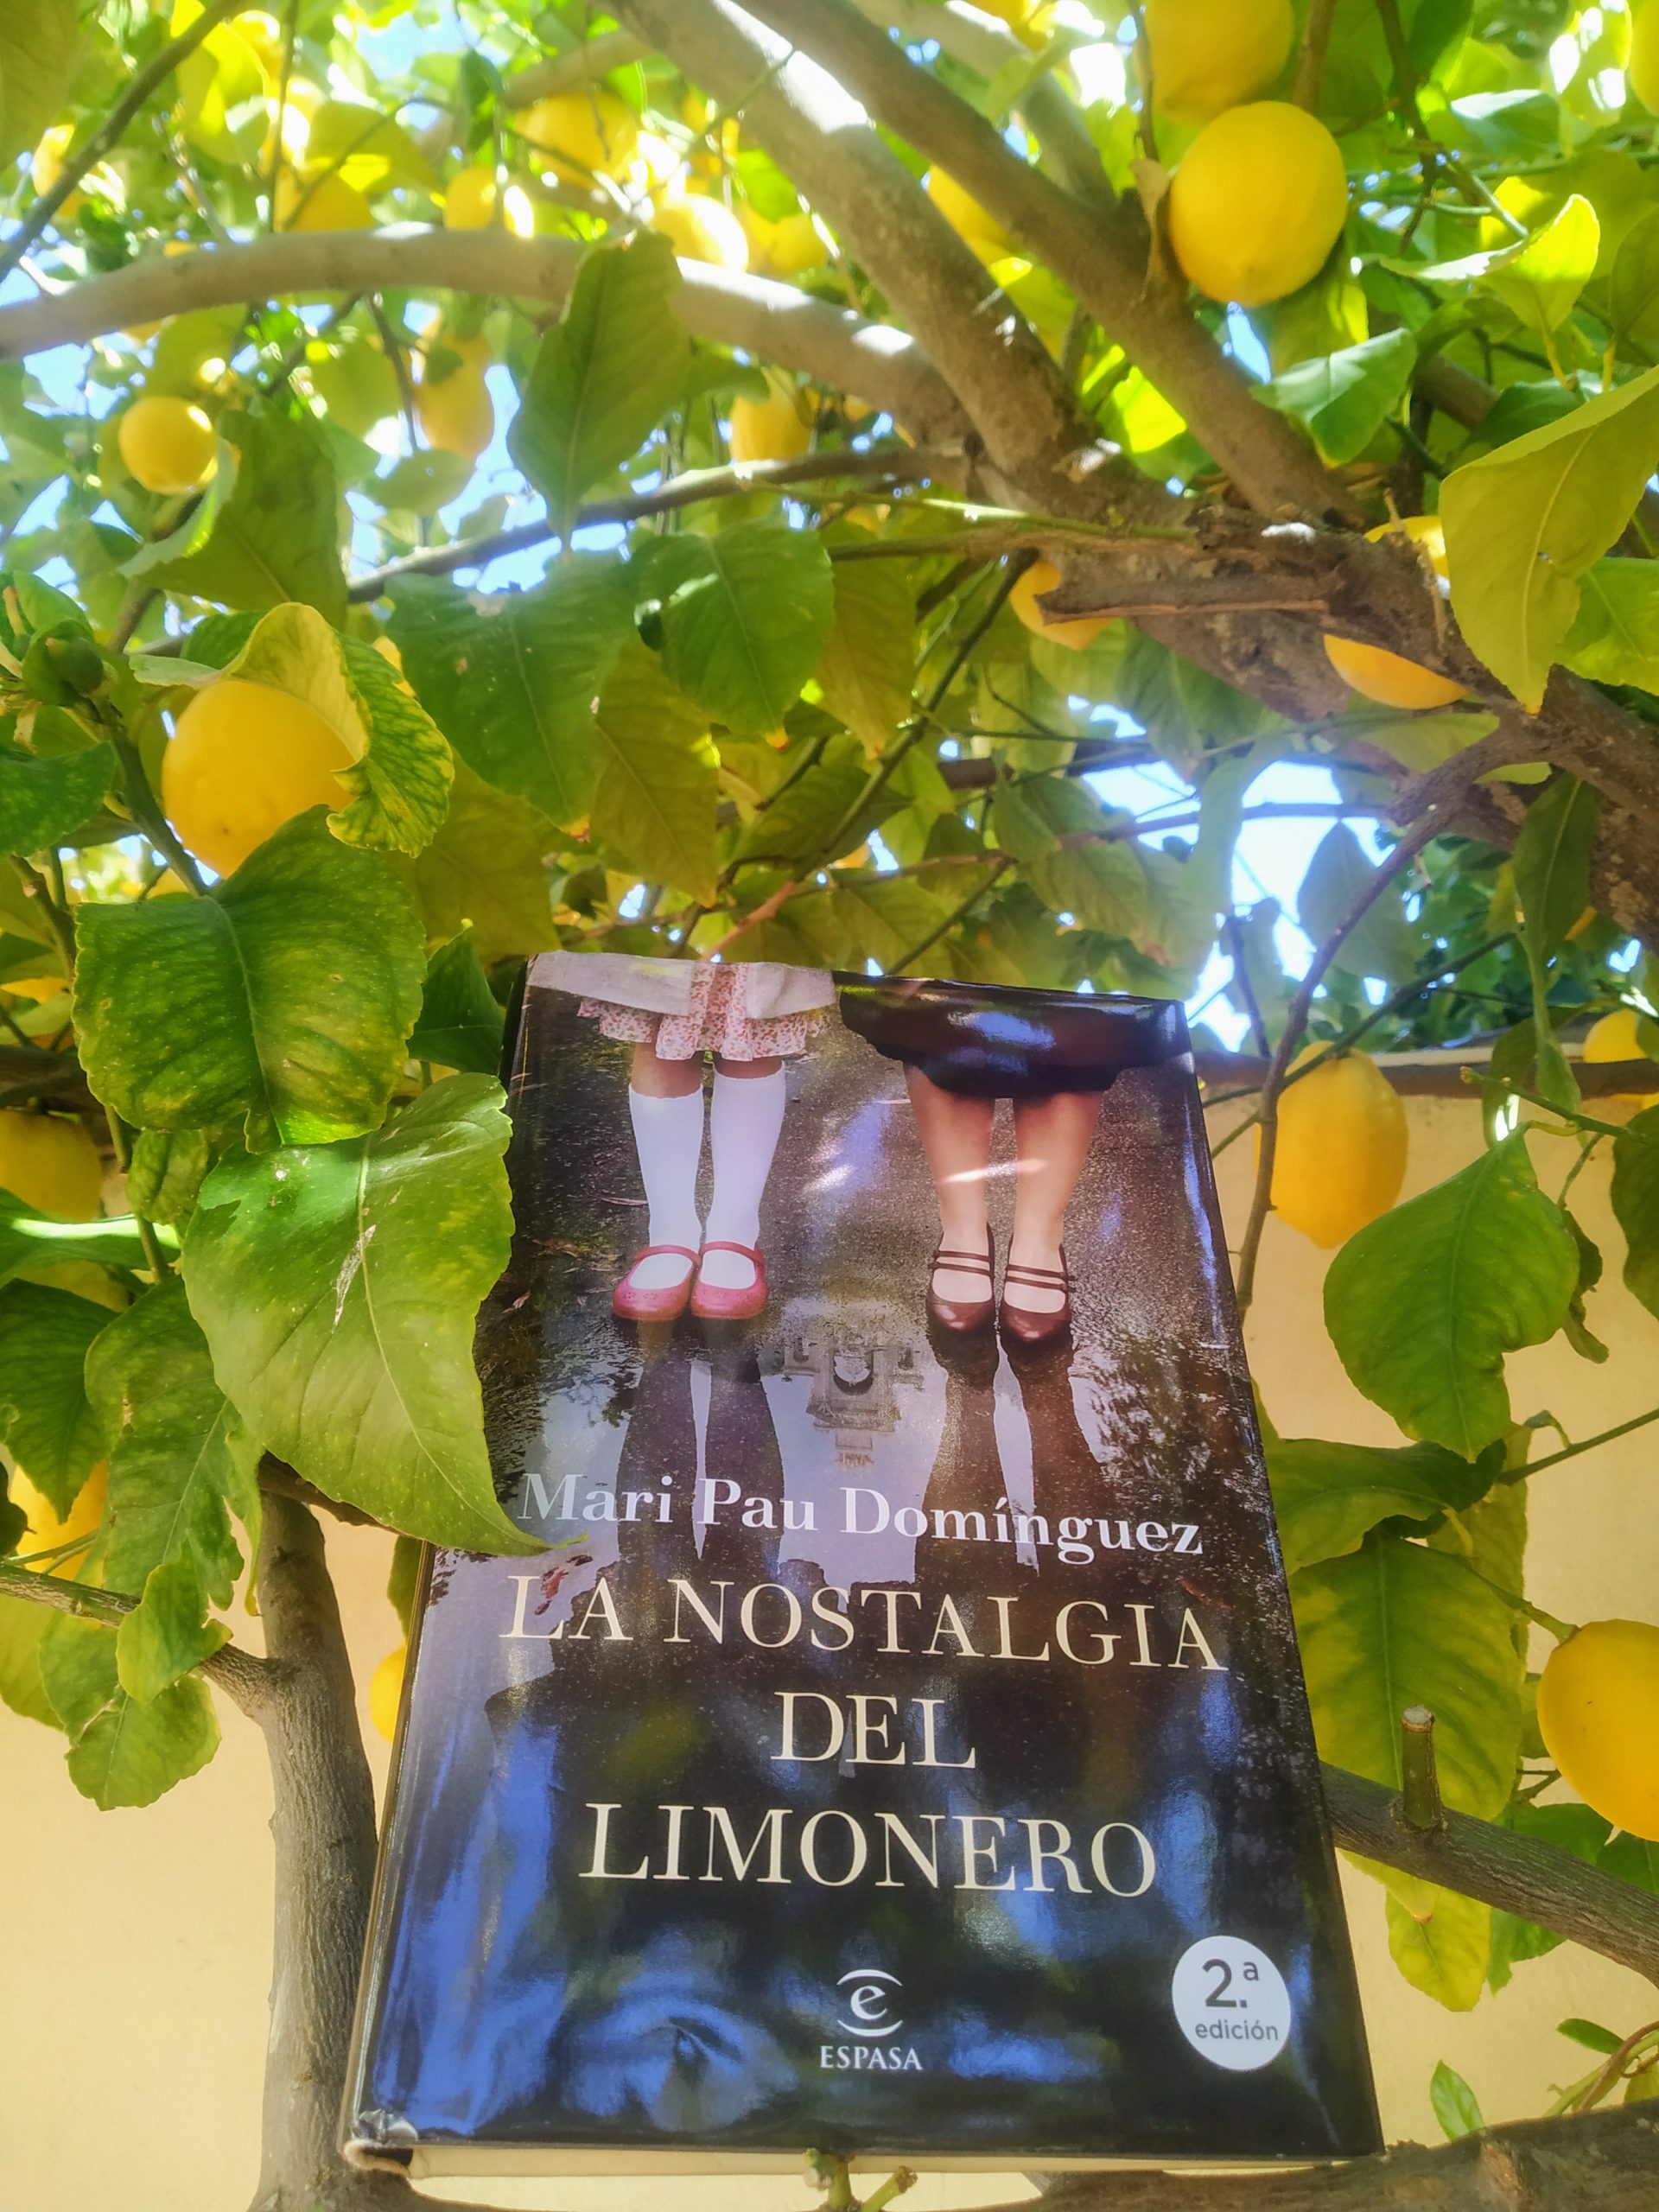 La nostalgia del limonero, de Mari Pau Domínguez